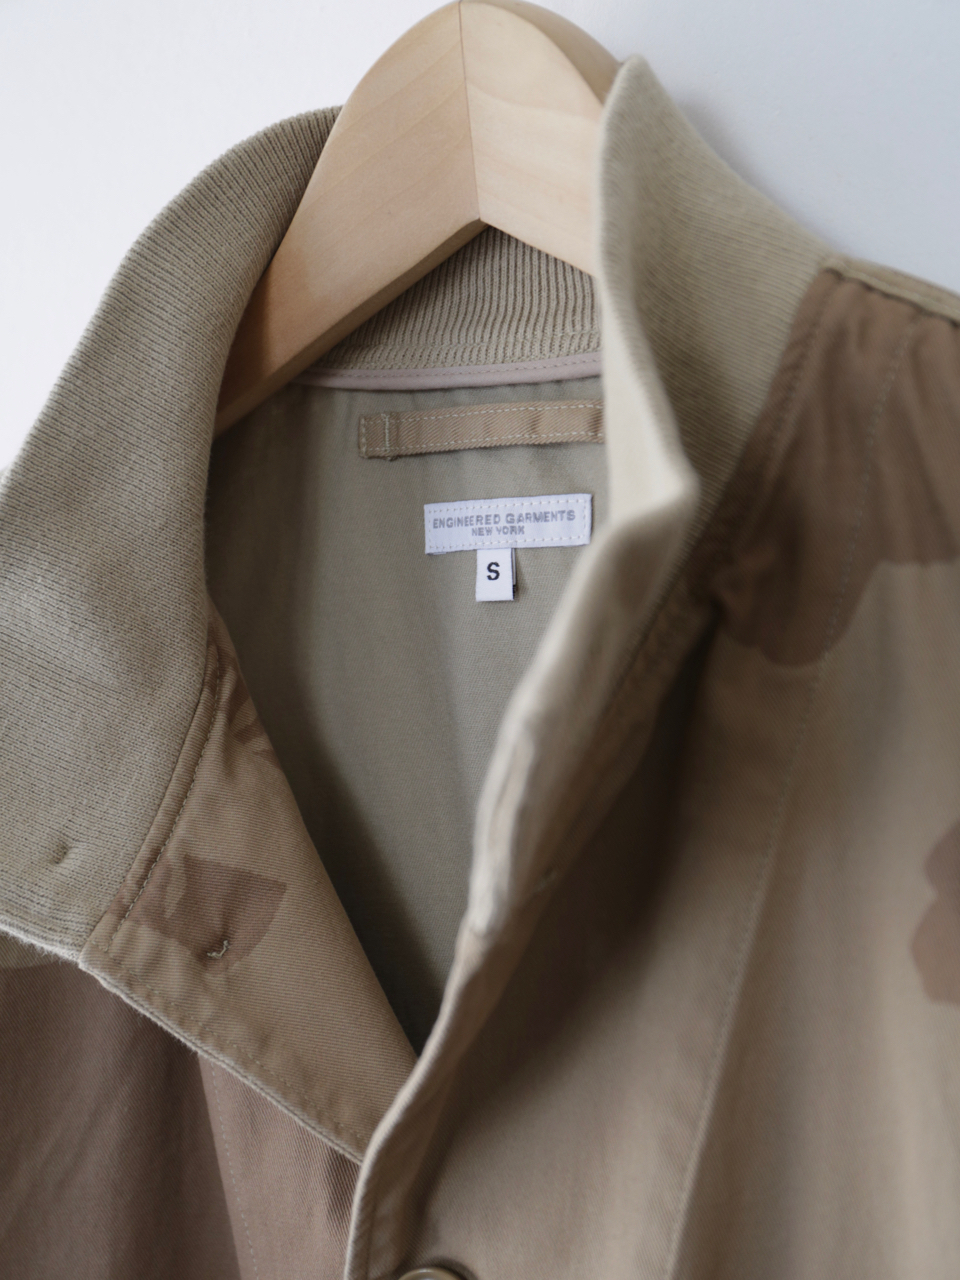 Engineered Garments A-1 Jacket - Animal Print Cotton Flat Twill ...